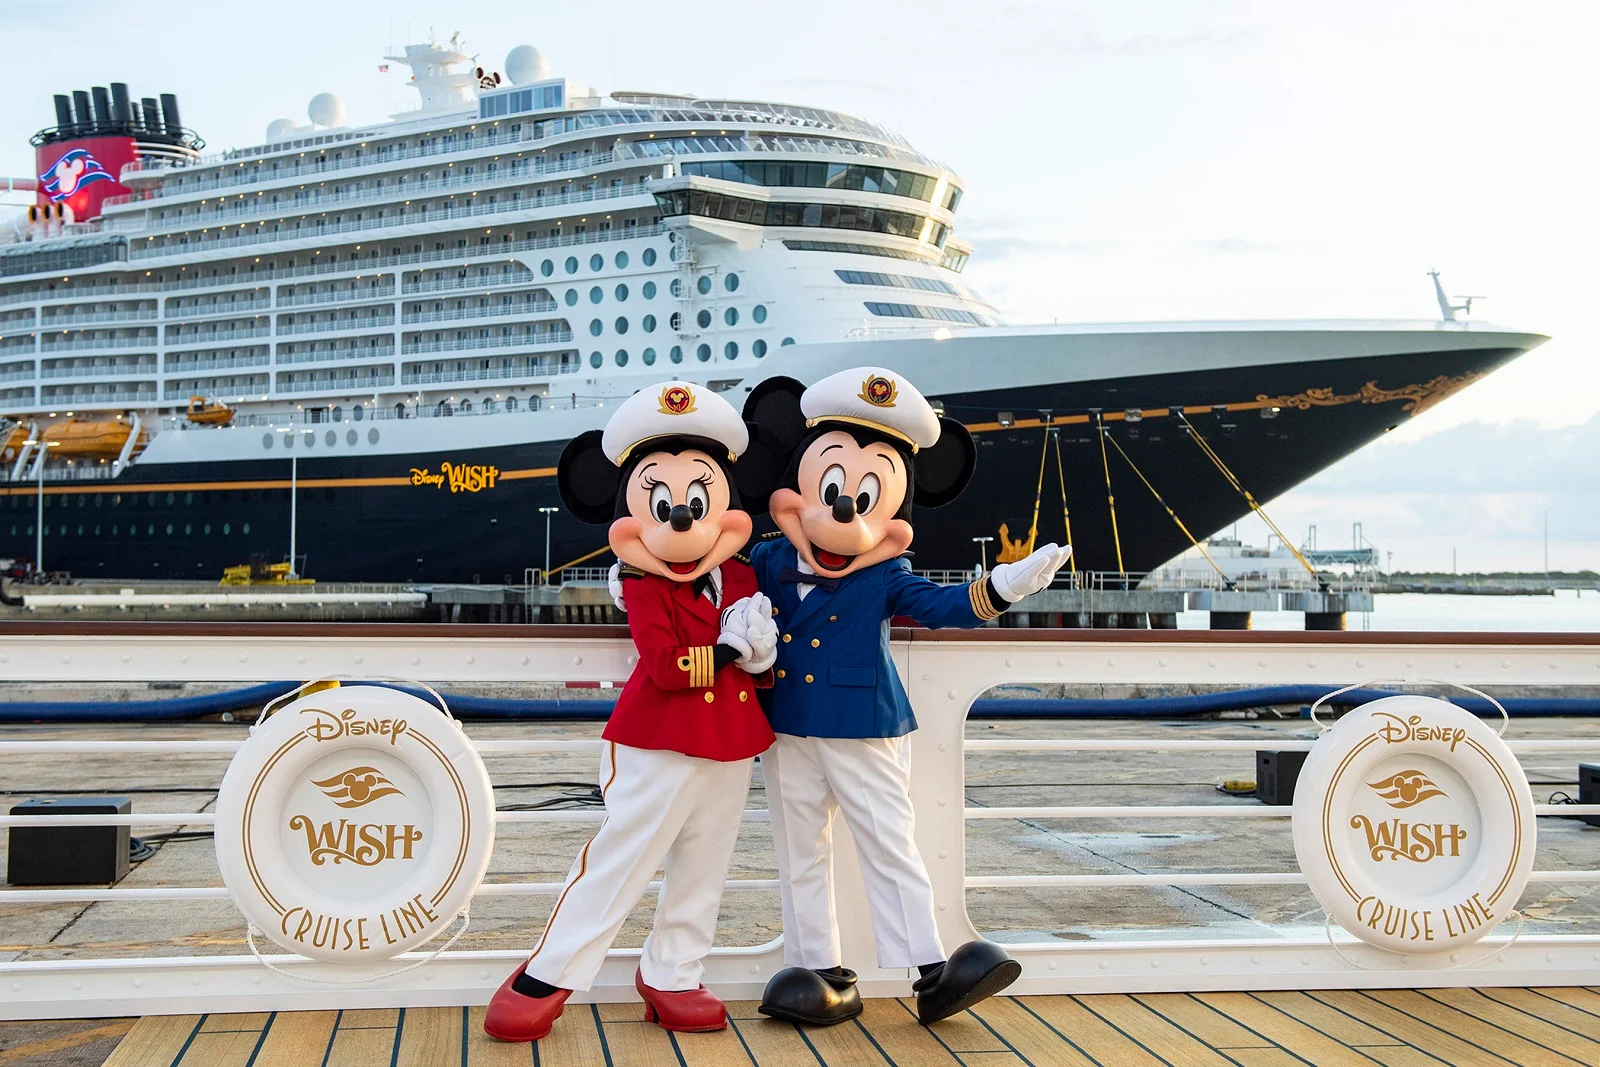 Disney Cruise Line -- The Disney Wish Cruise Ship